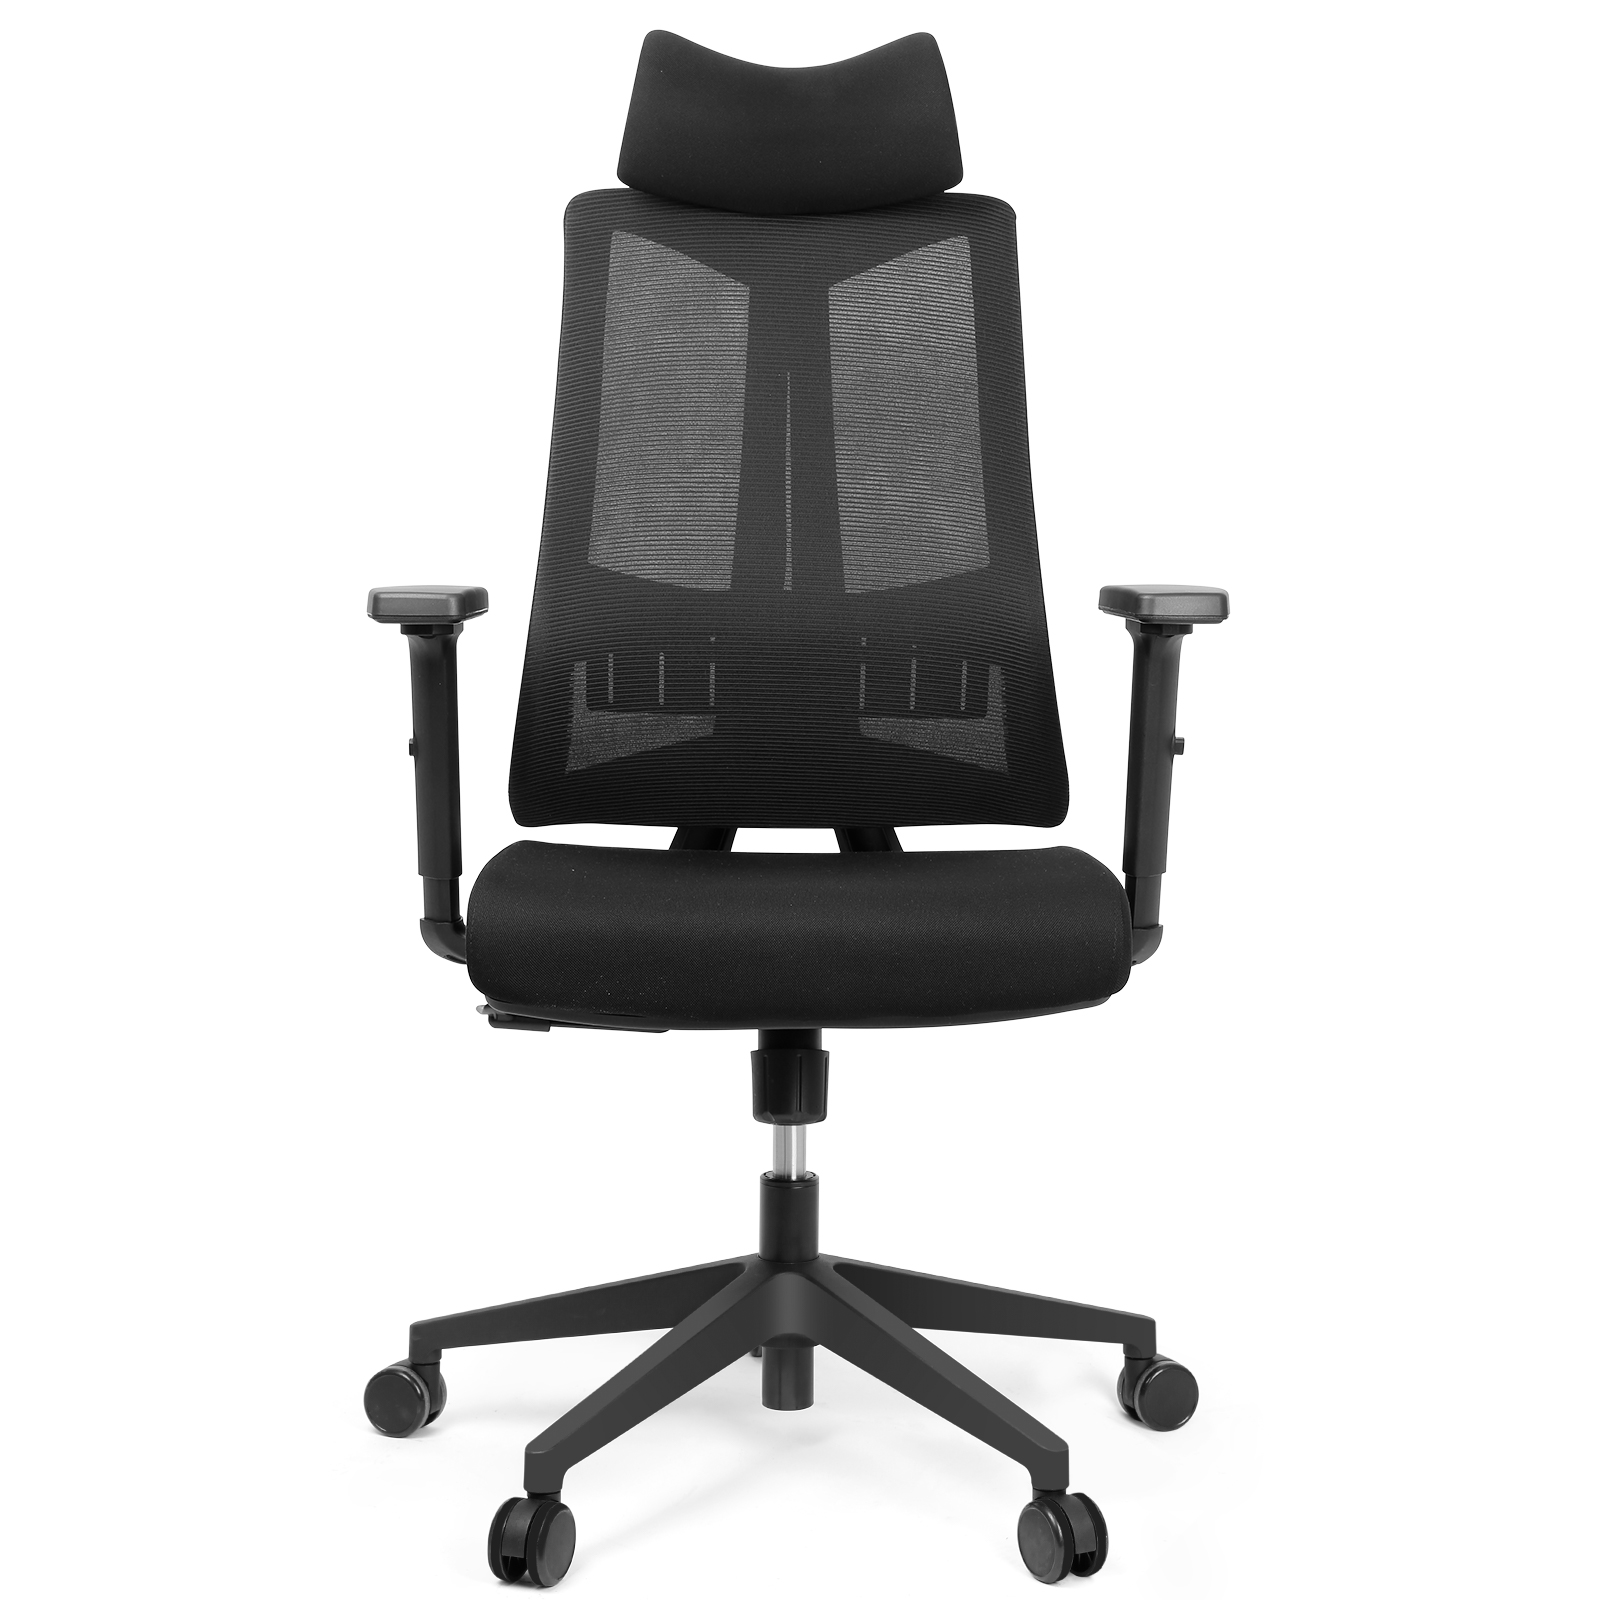 FOXSPORT schwarz M11 stuhl, Bürostuhl Gaming